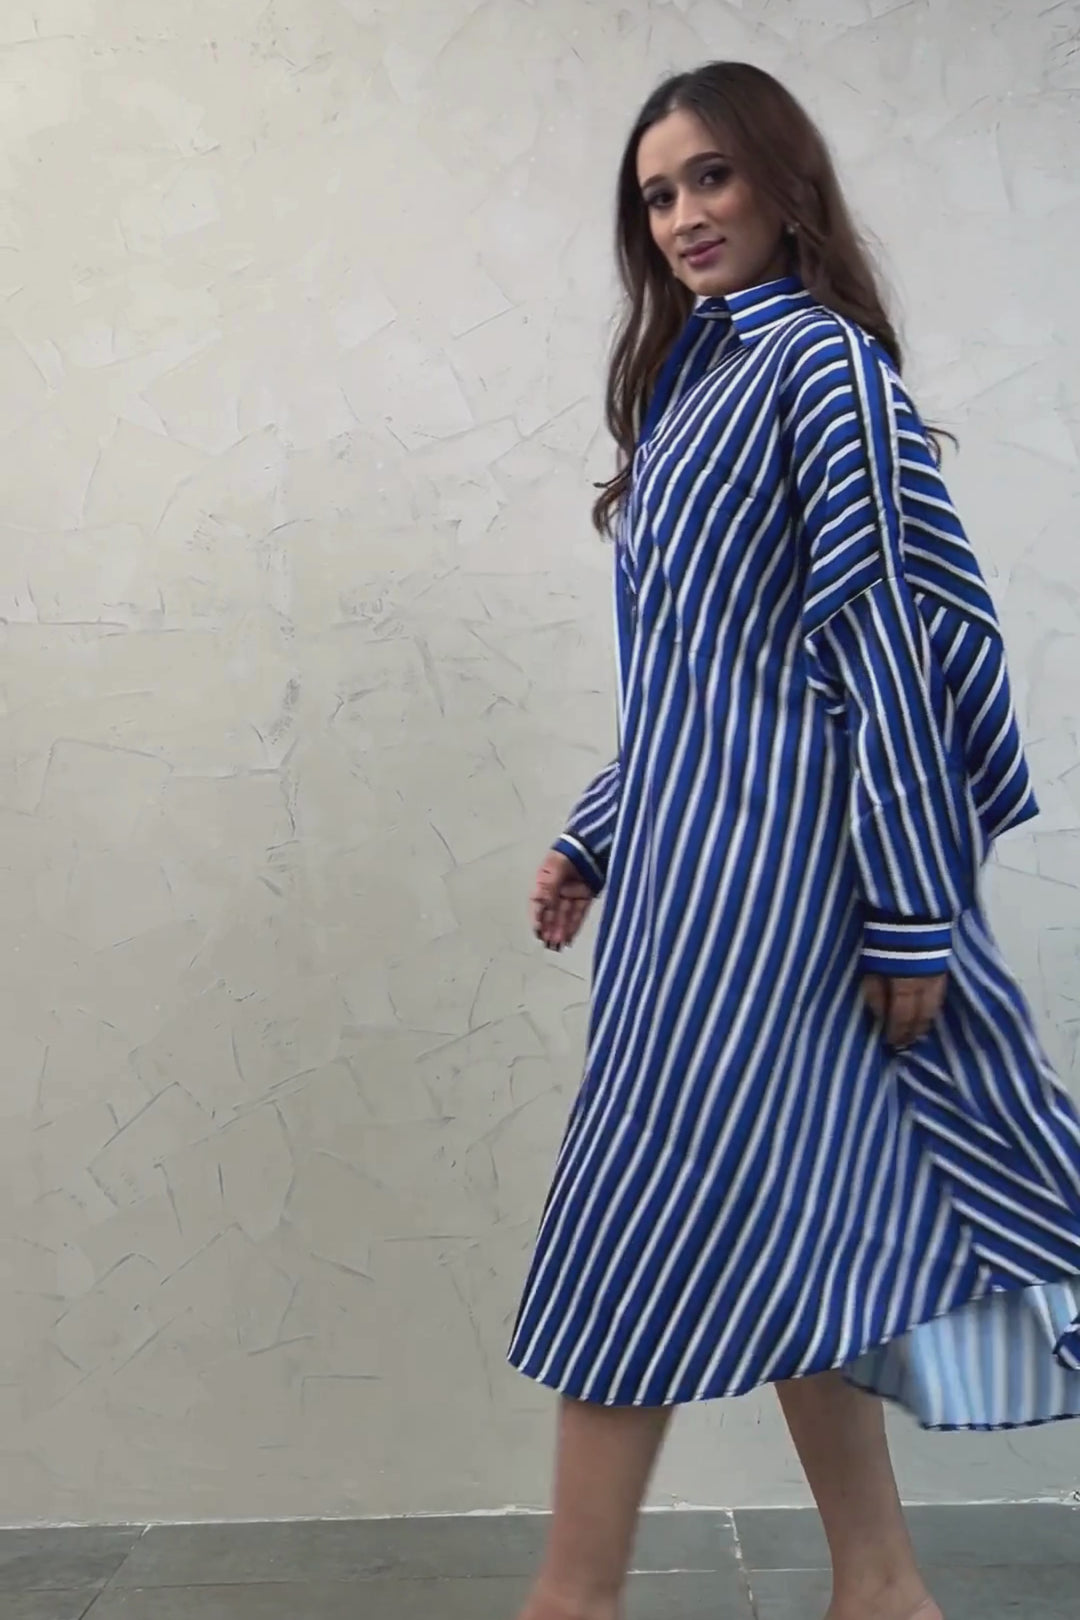 Elegant blue striped dress